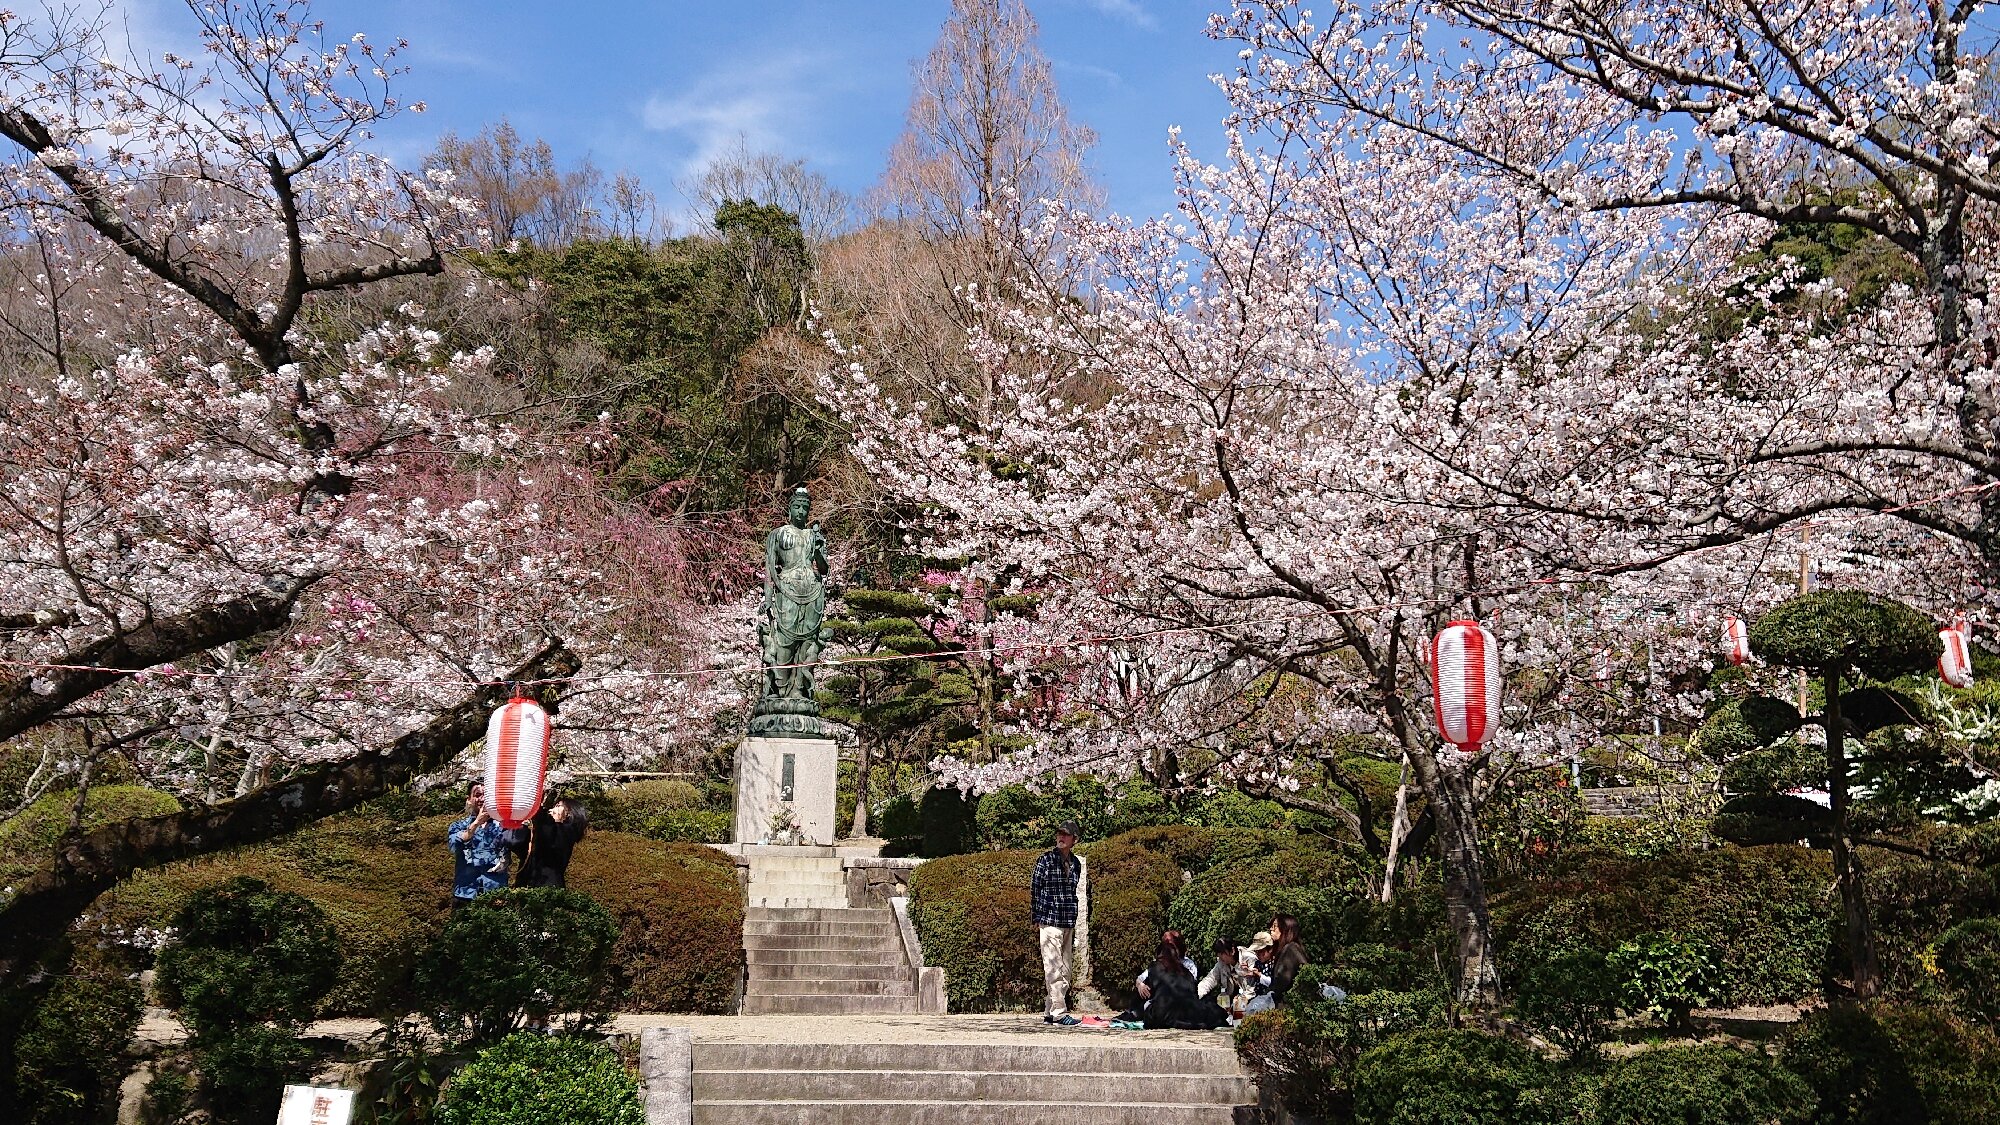 Cherry blossoms in Satsukiyama Park.